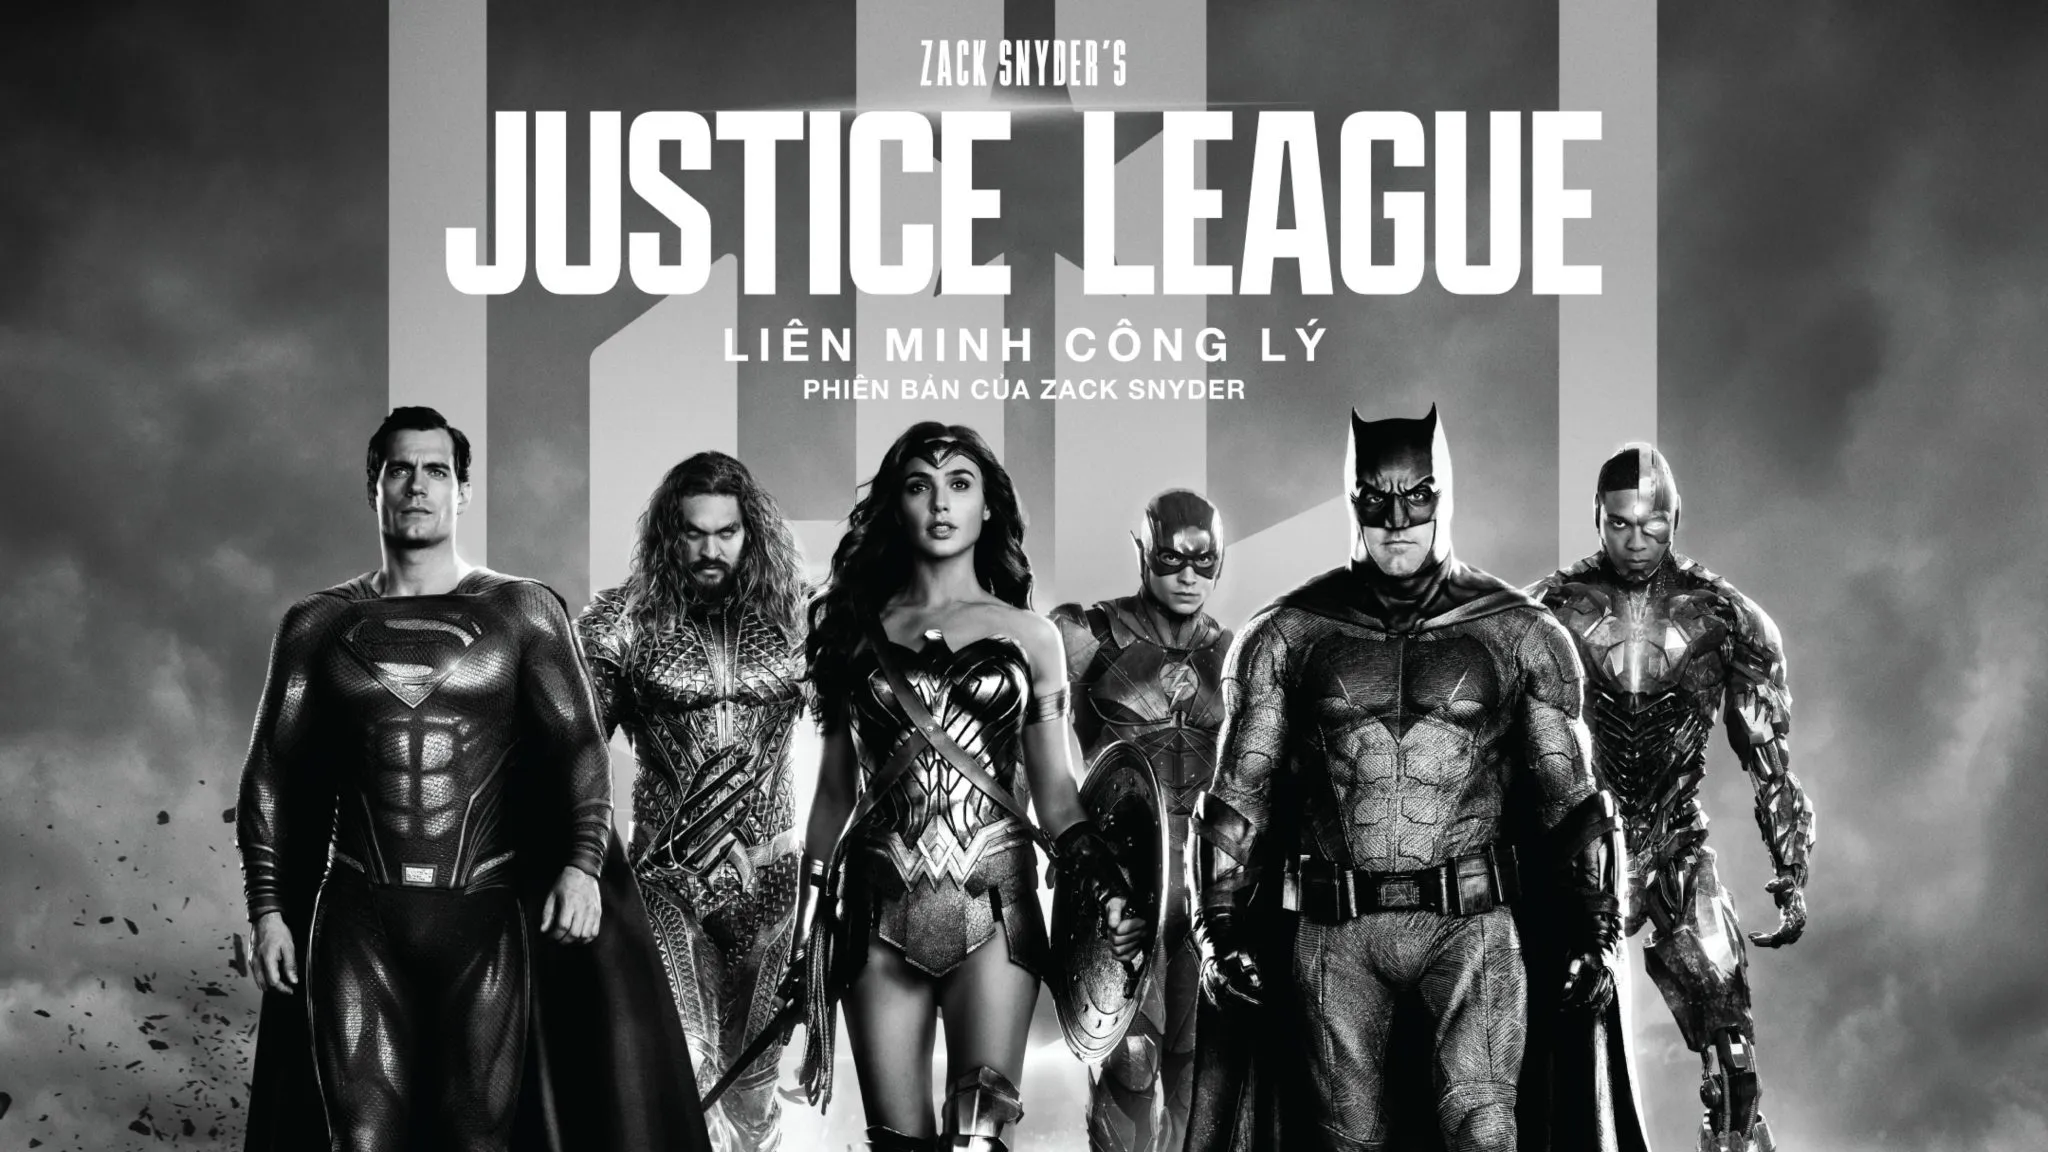 Review phim Zack Snyder’s Justice League (Liên Minh Công Lý phiên bản của Zack Snyder)